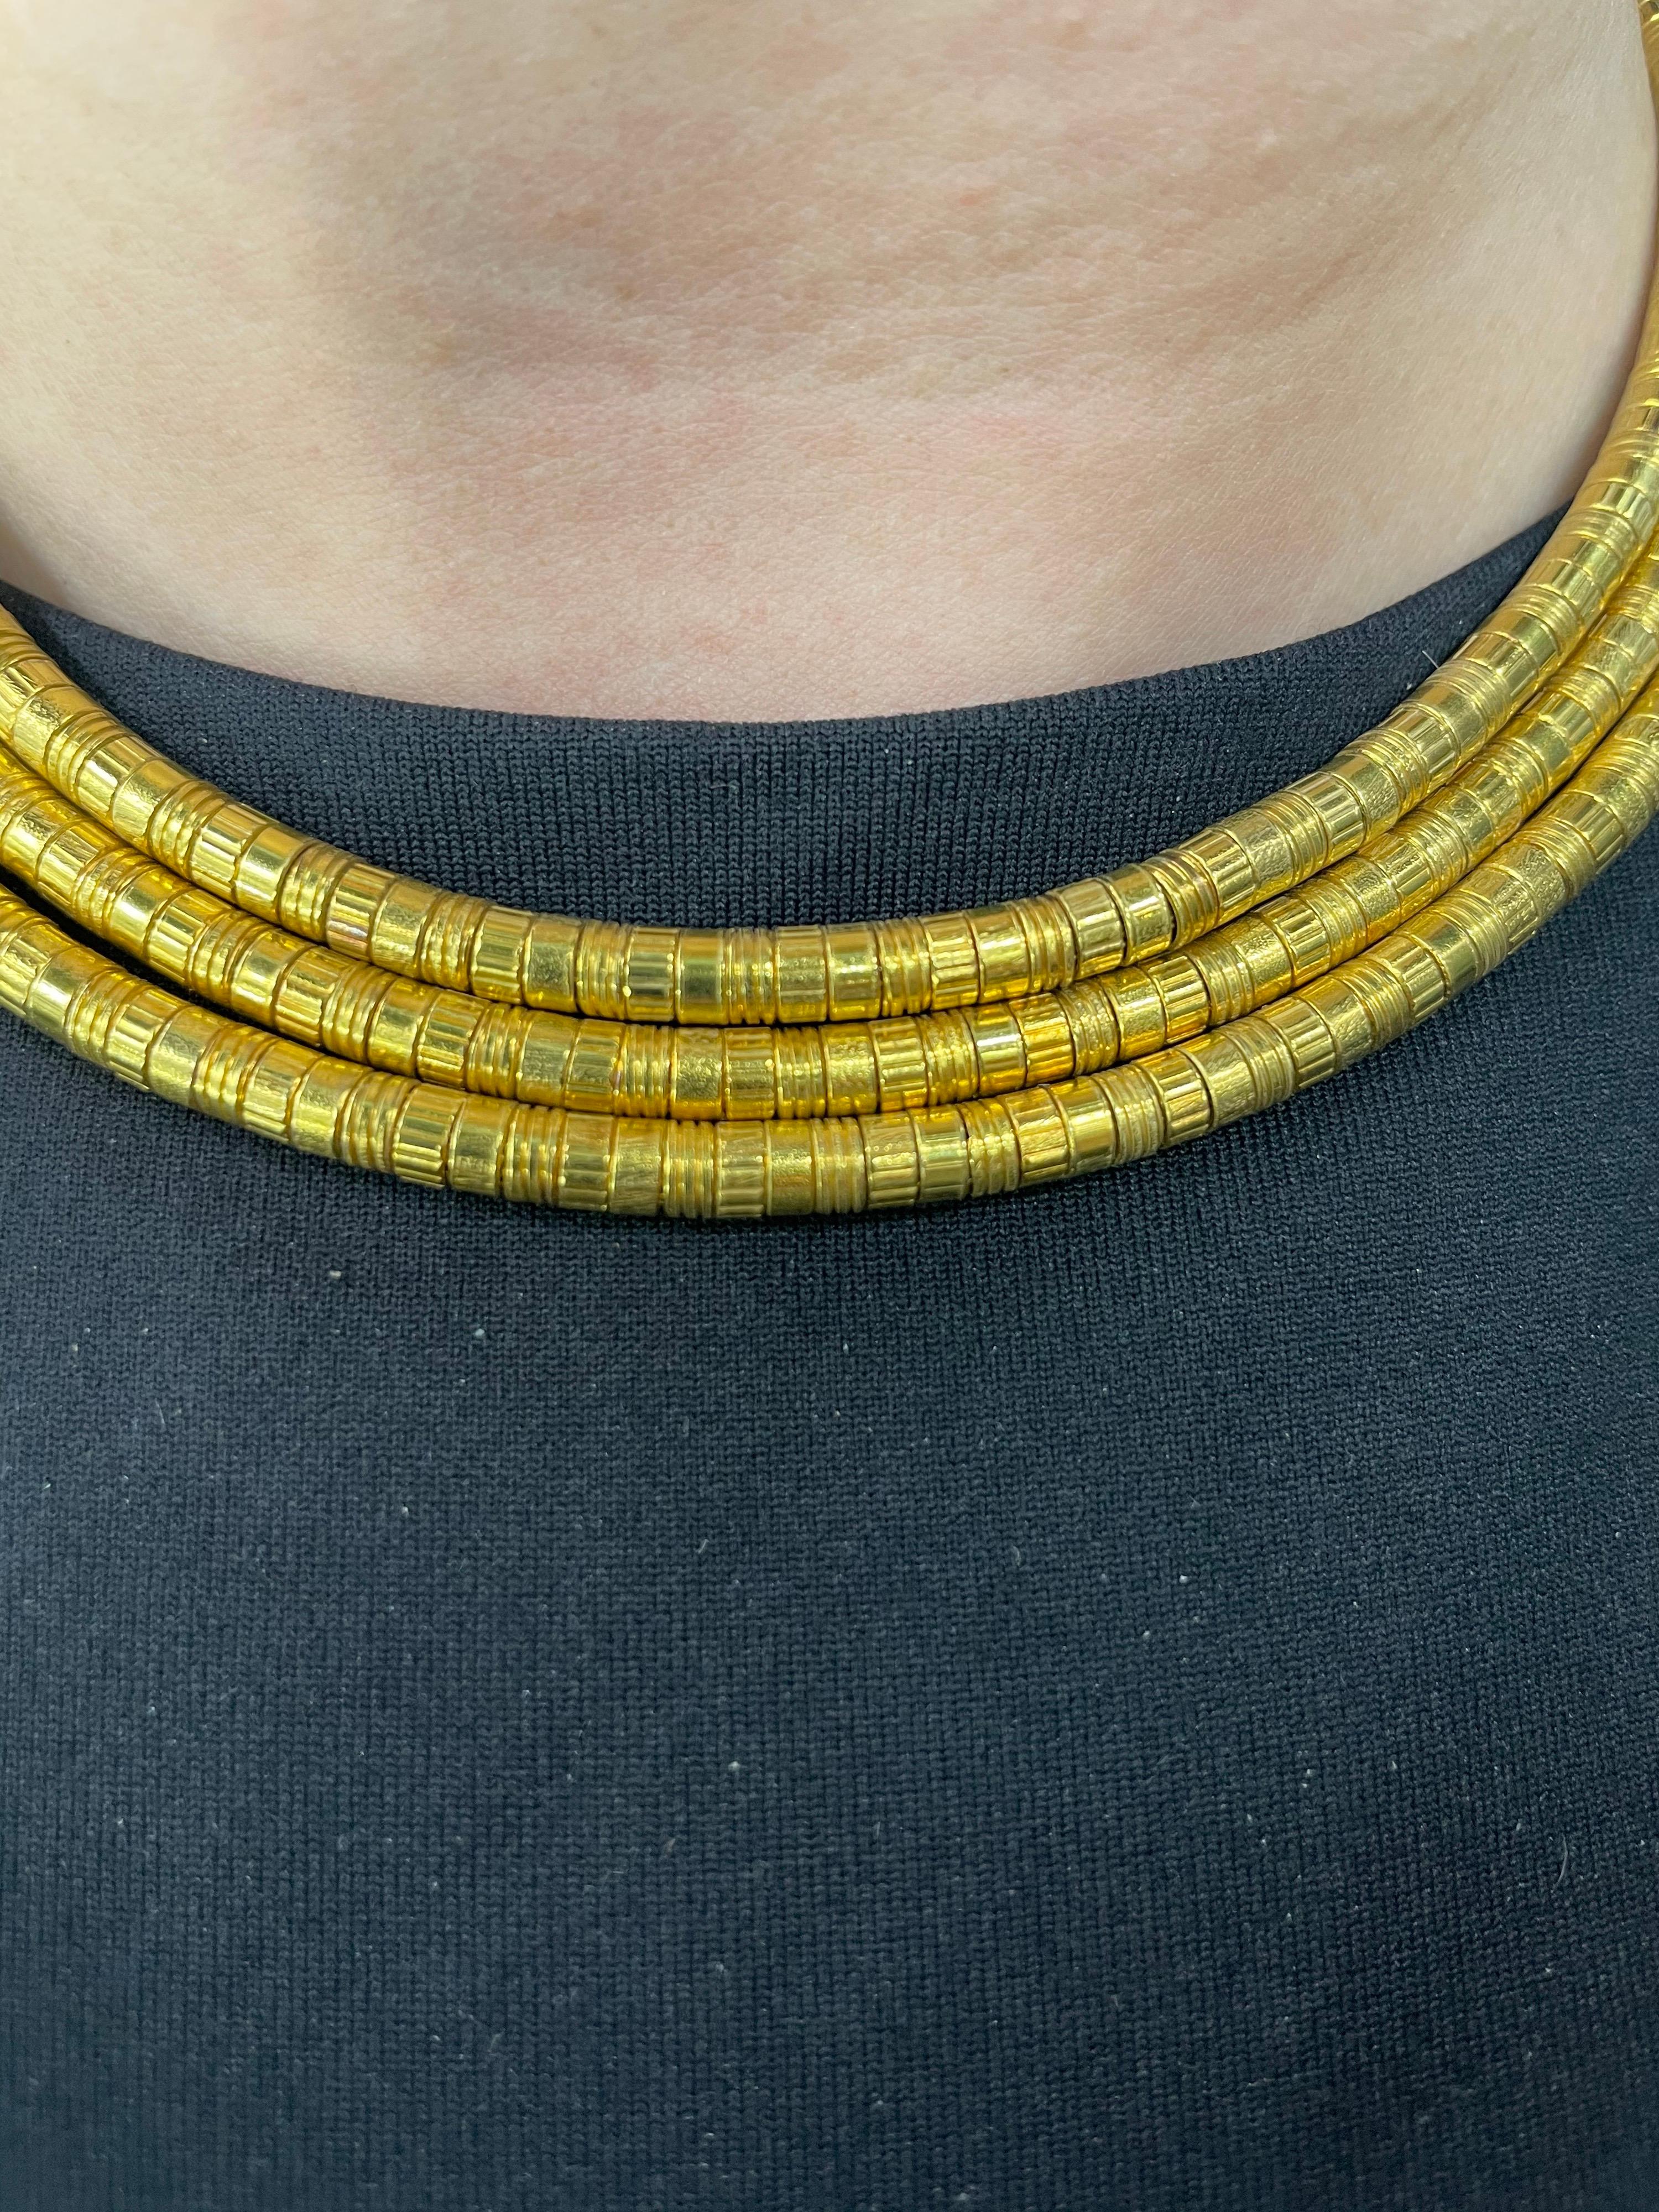 Ilias Lalaounis Greece 18 Karat Yellow Gold Three Row Collar Necklace 127 Grams 7